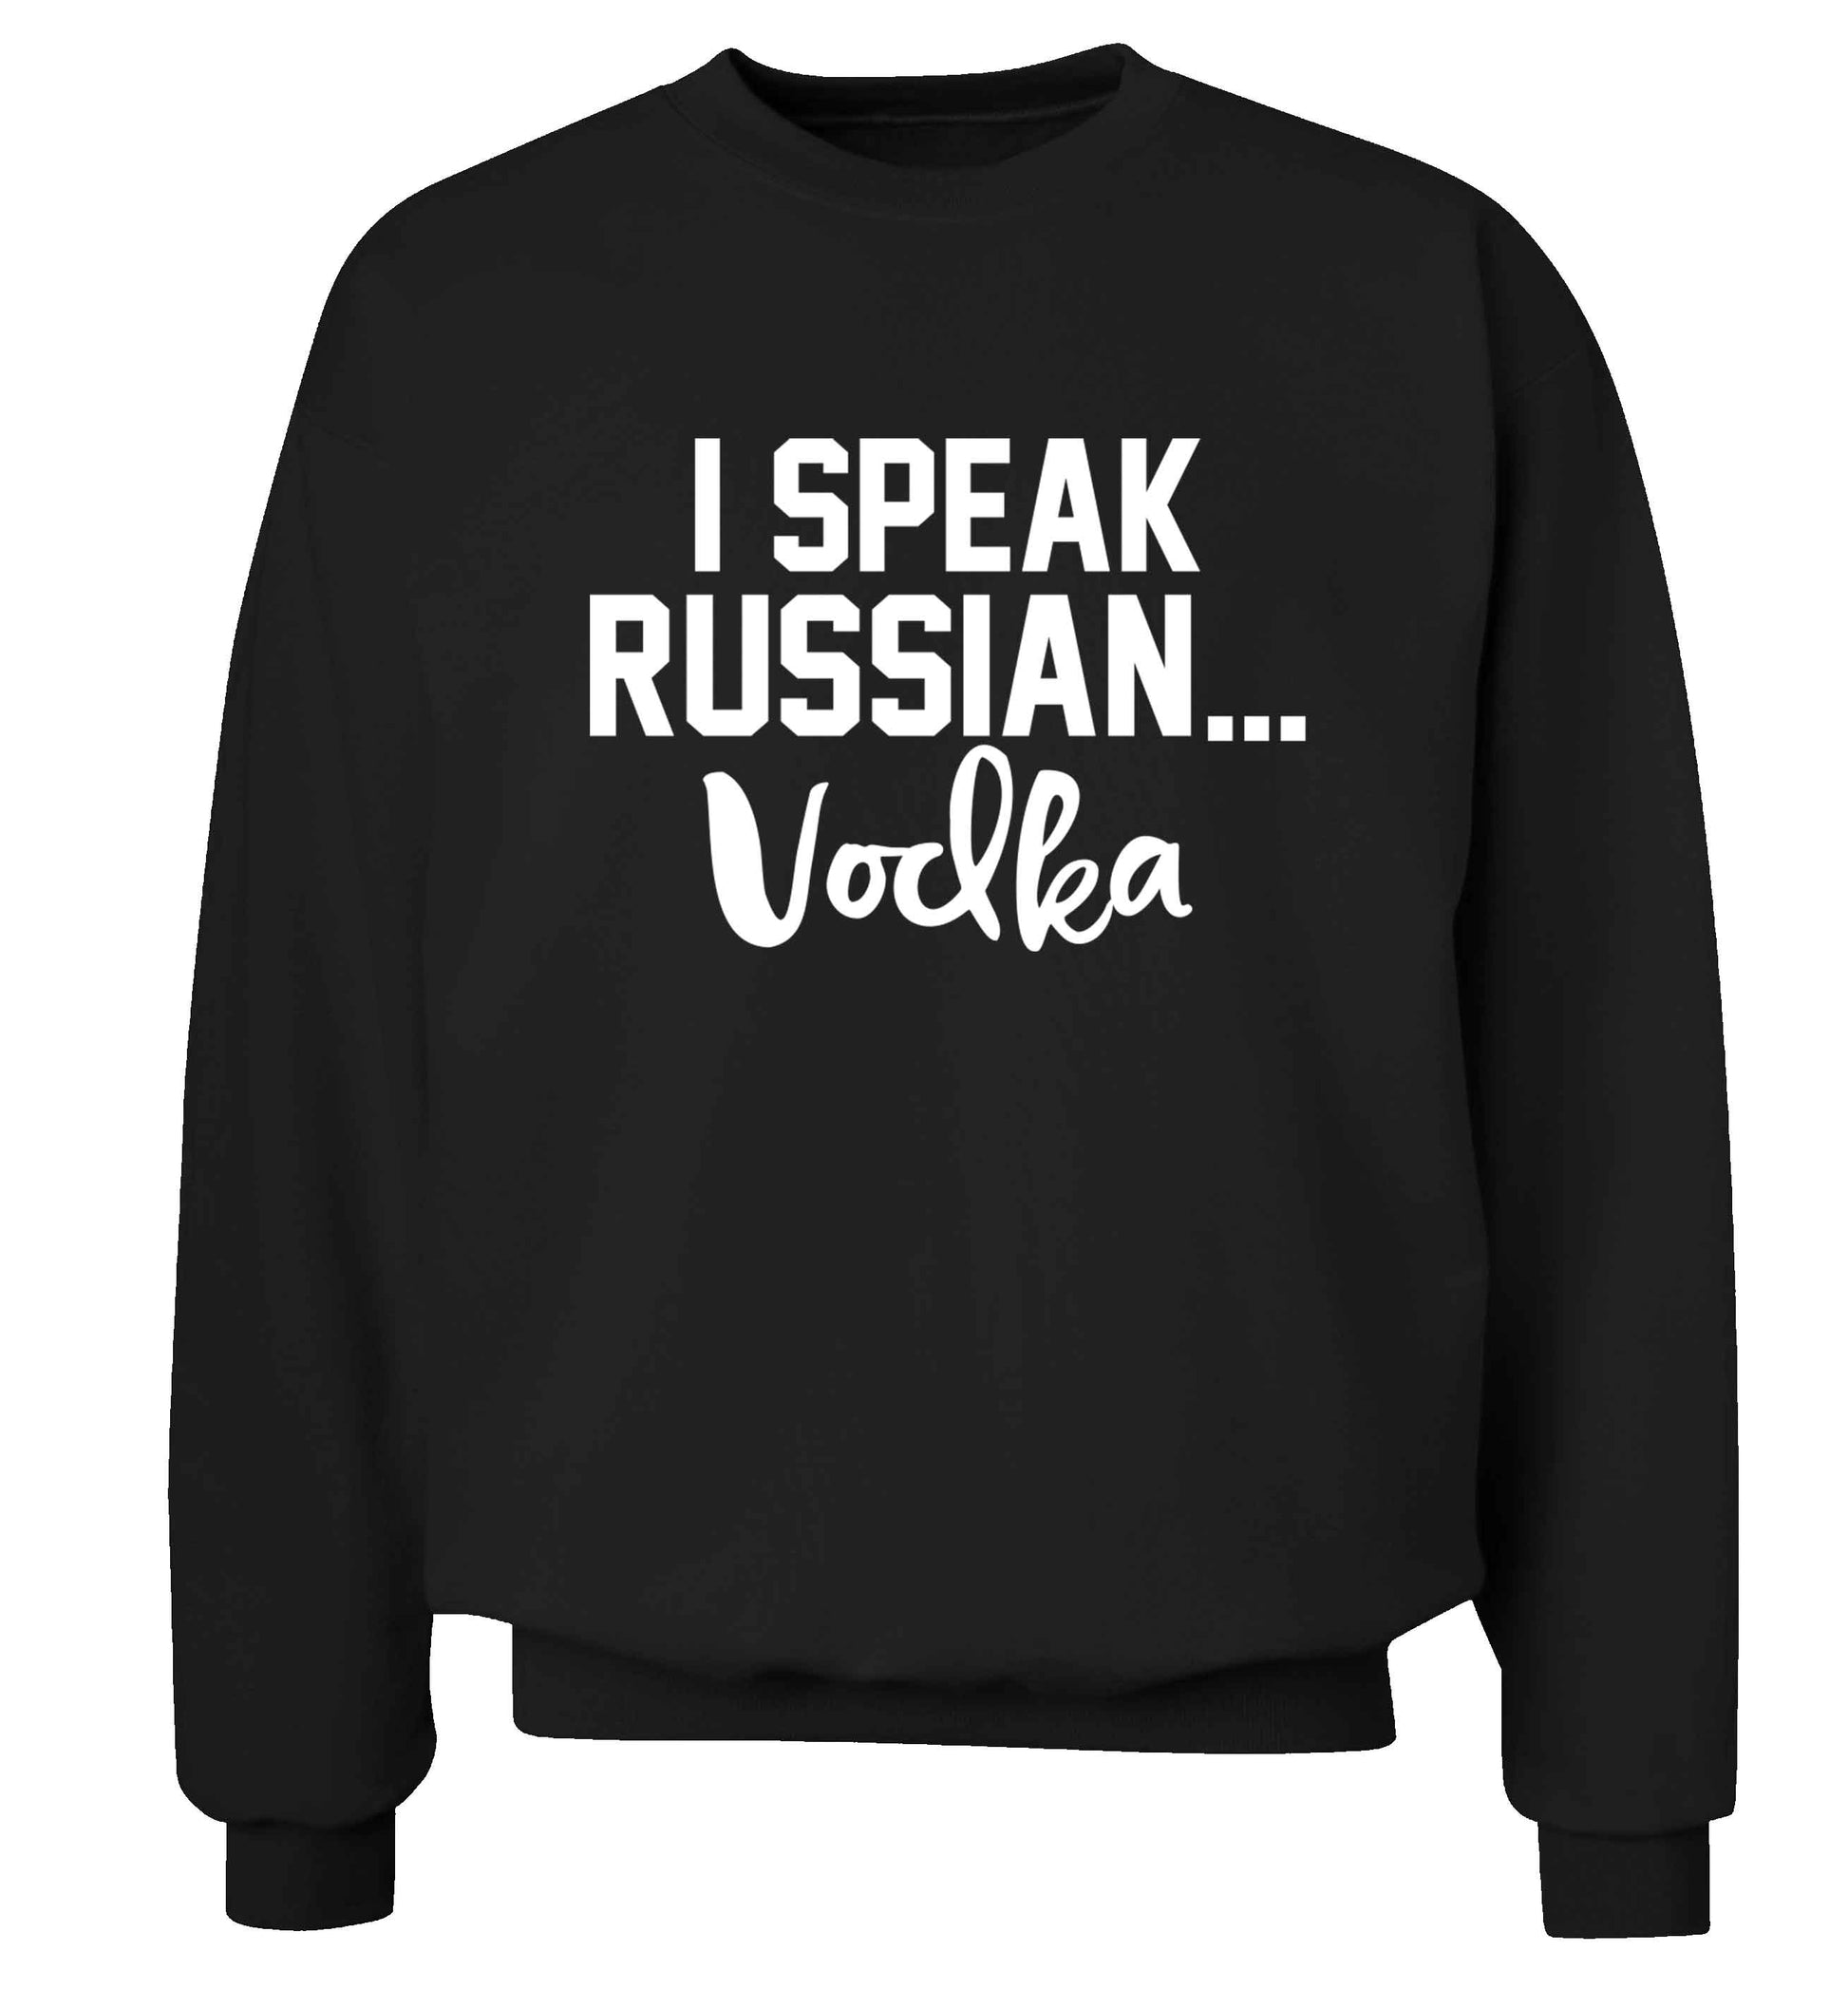 I speak russian...vodka Adult's unisex black Sweater 2XL